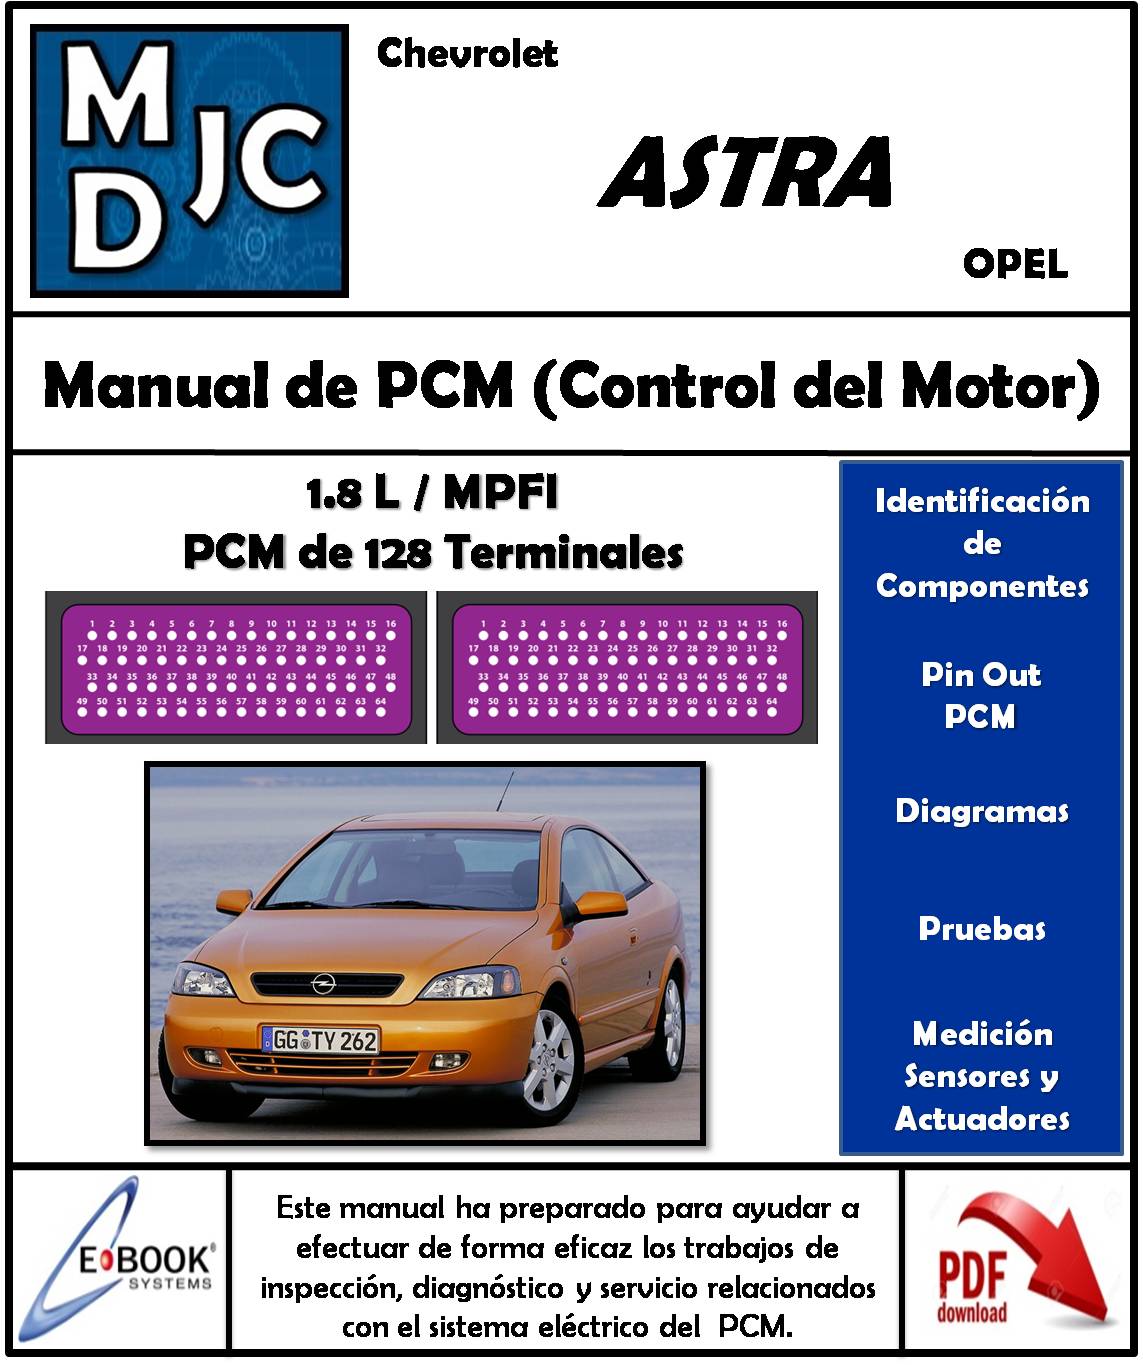 Manual de PCM y Control de Motor Chevrolet Astra 1.8 L MPFI